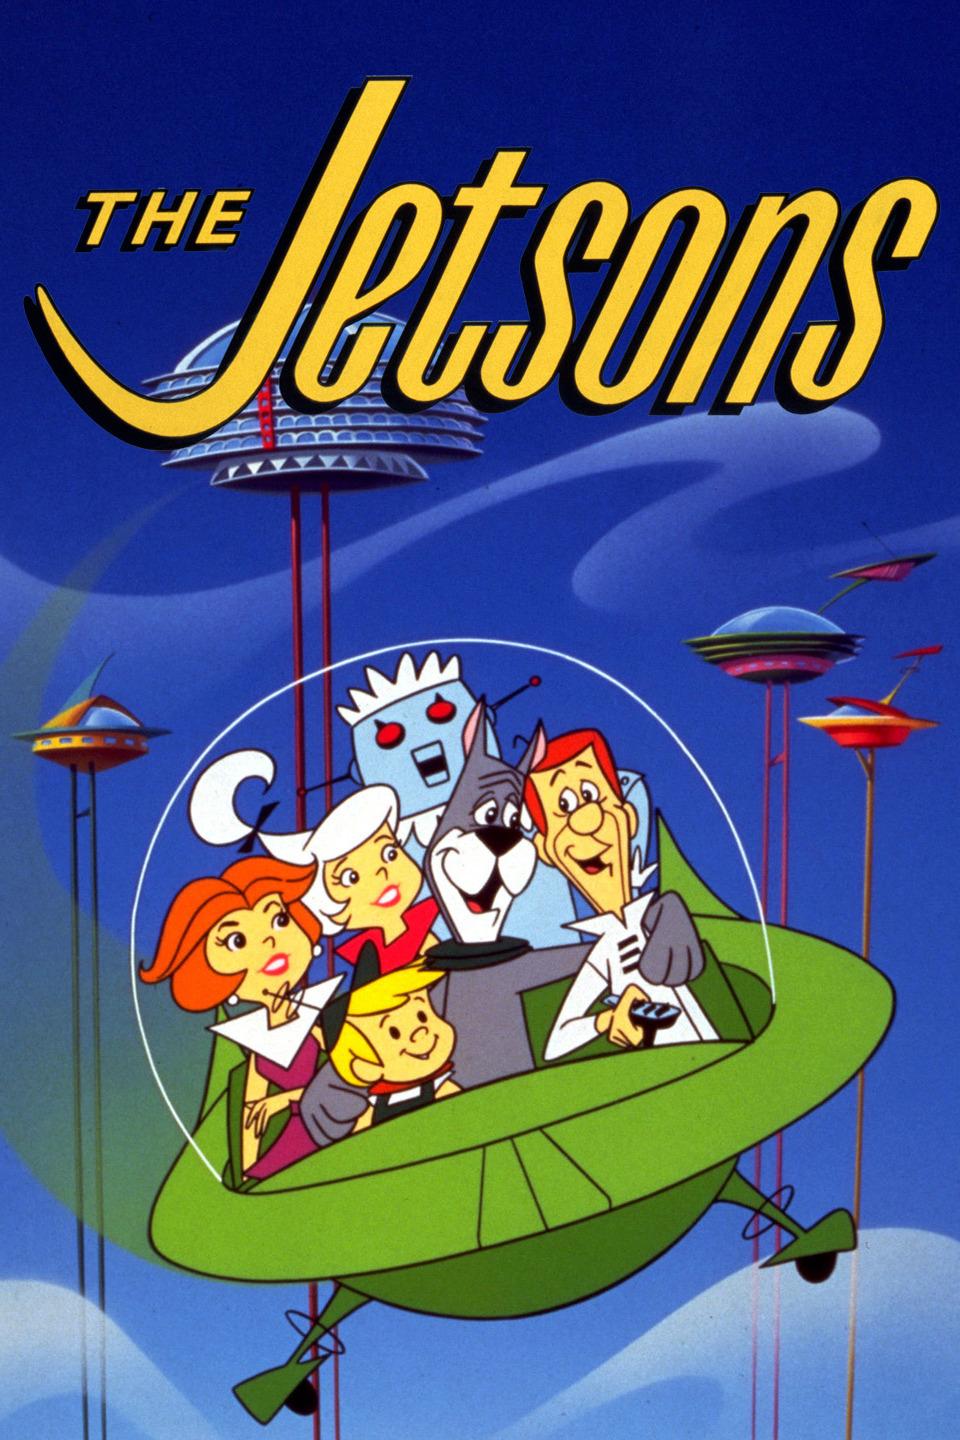 The Jetsons (TV Series 1962–1963) - IMDb